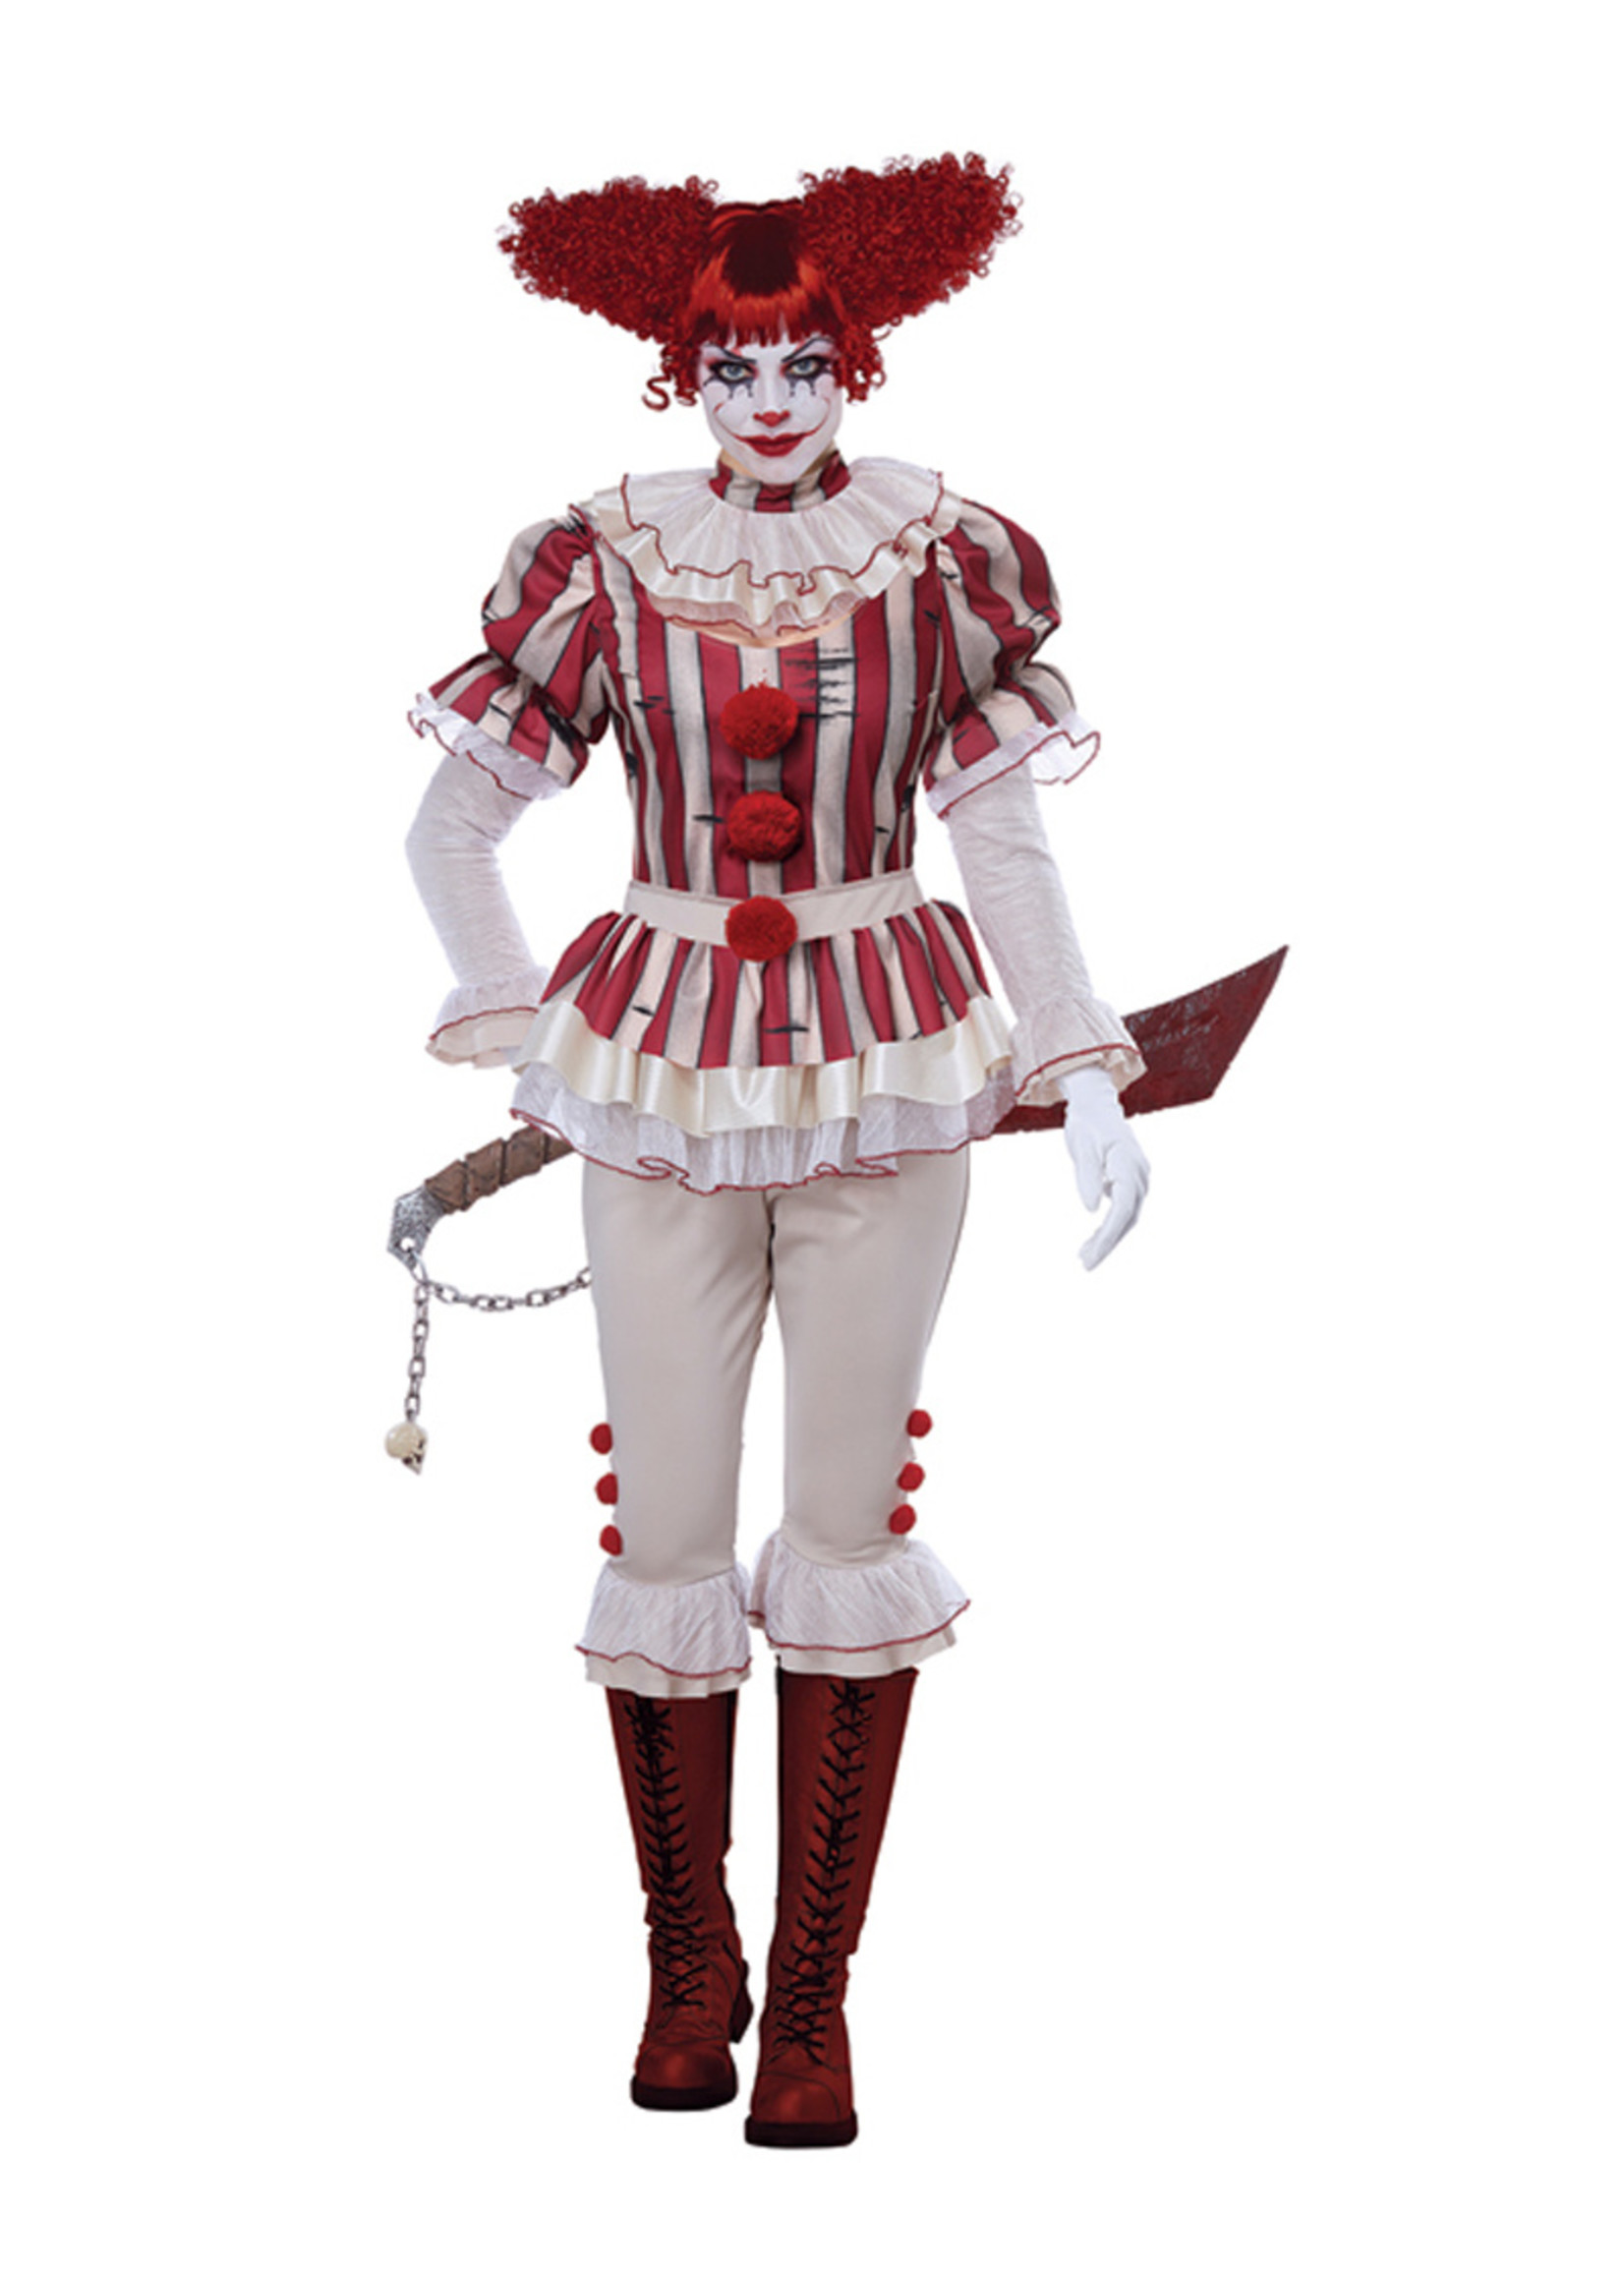 Sadistic Clown Costume - Women's - Party On!